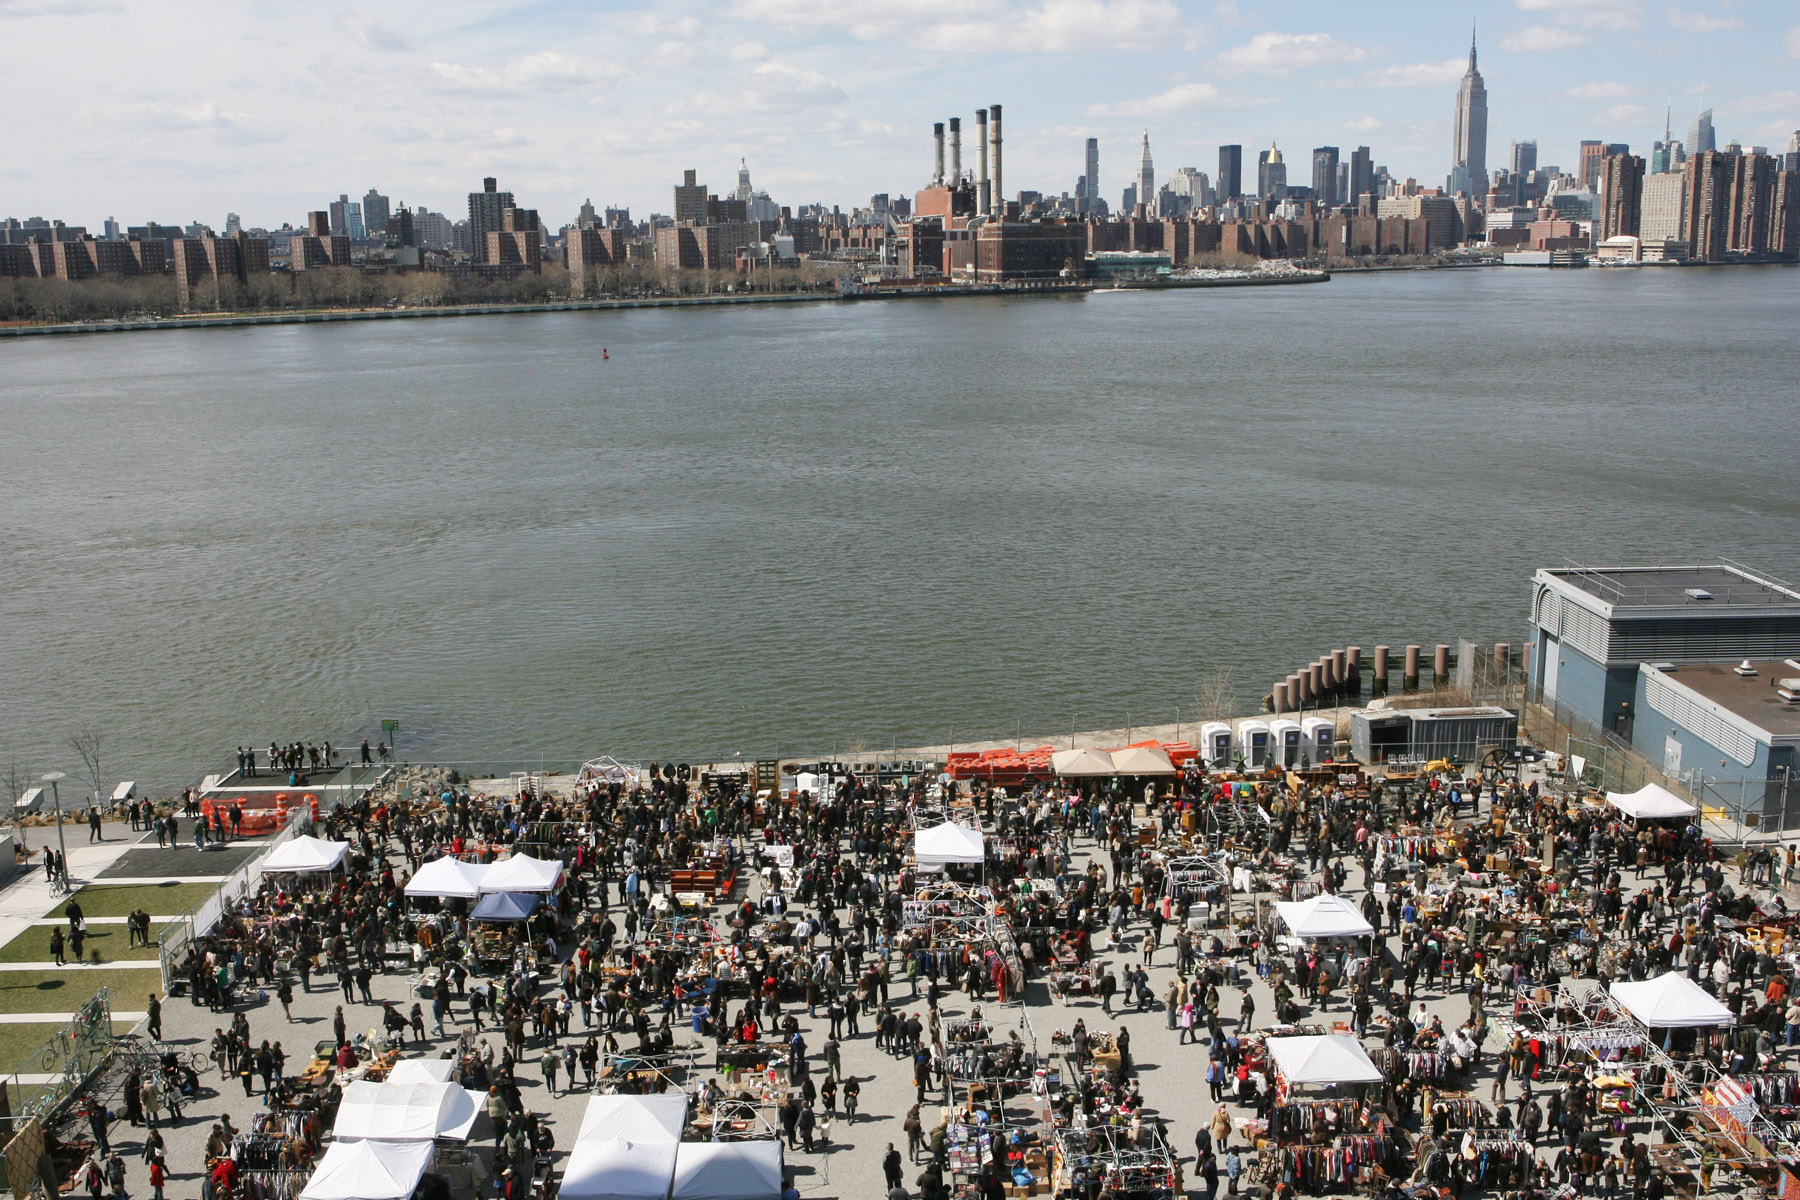 Brooklyn Flea Sunday Market Moves To 50 Kent, Returns This Sunday